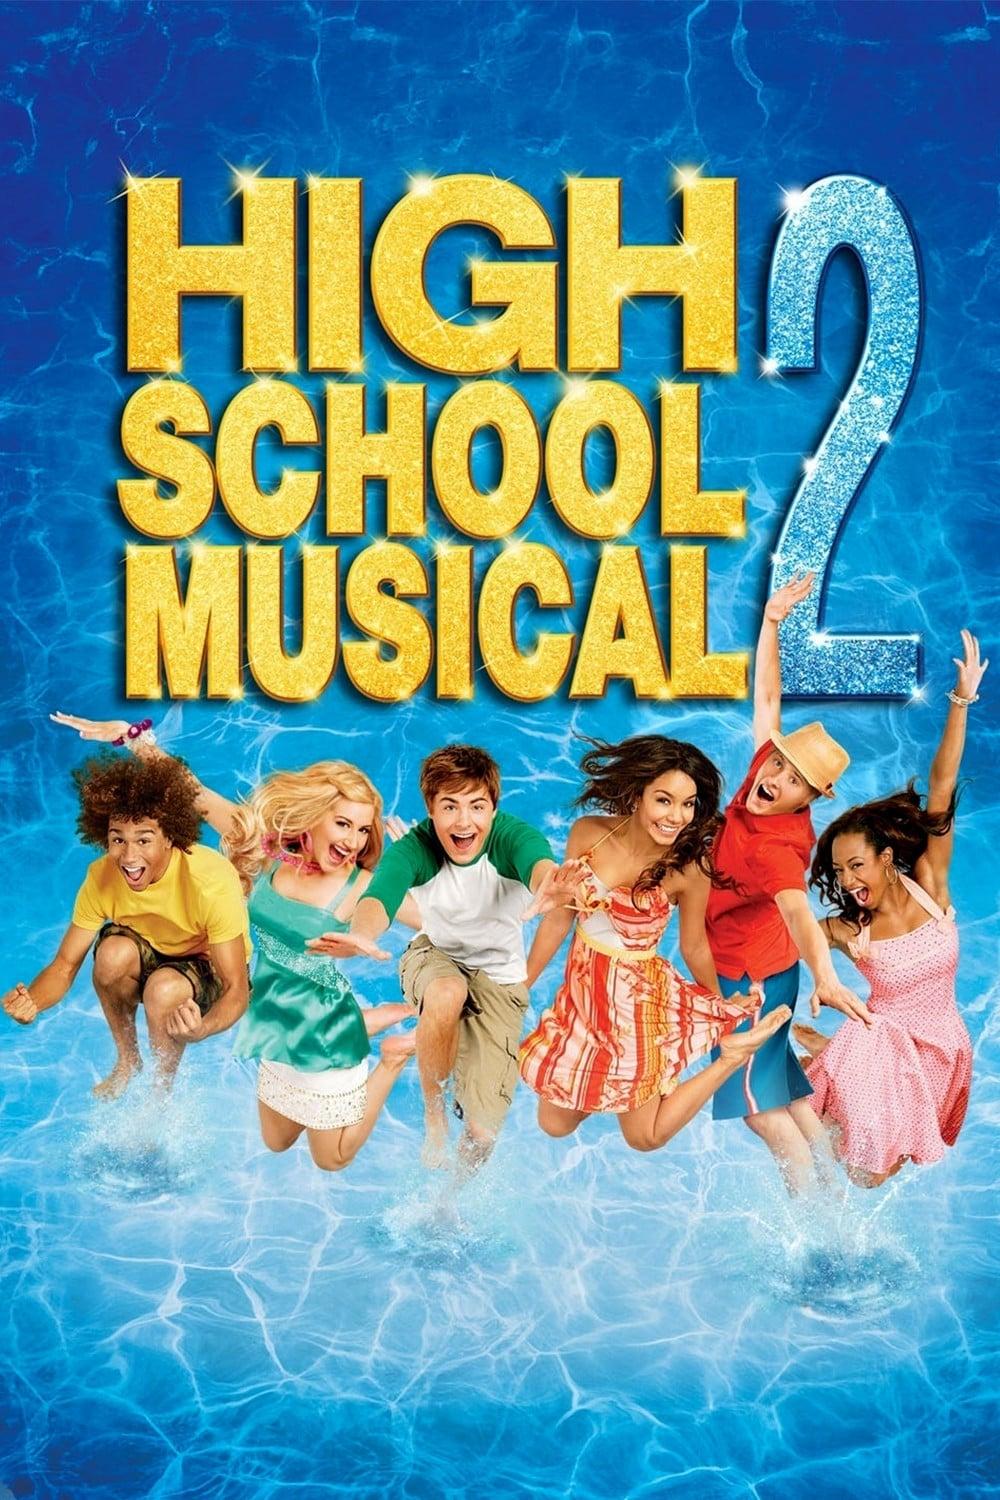 High School Musical 2 poster